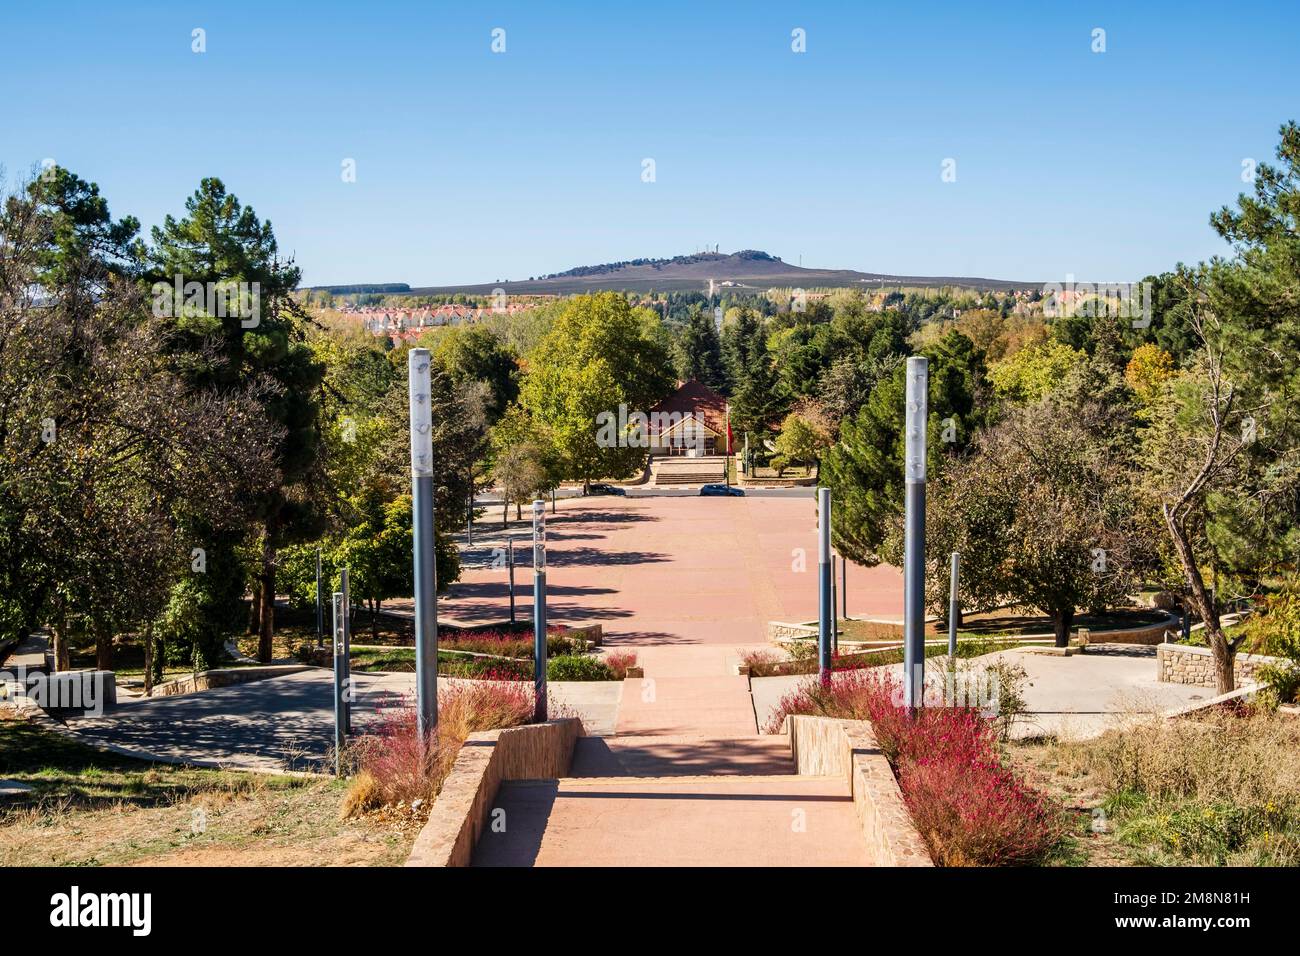 Mohamed V park in mountainous Ifran, Morocco Stock Photo